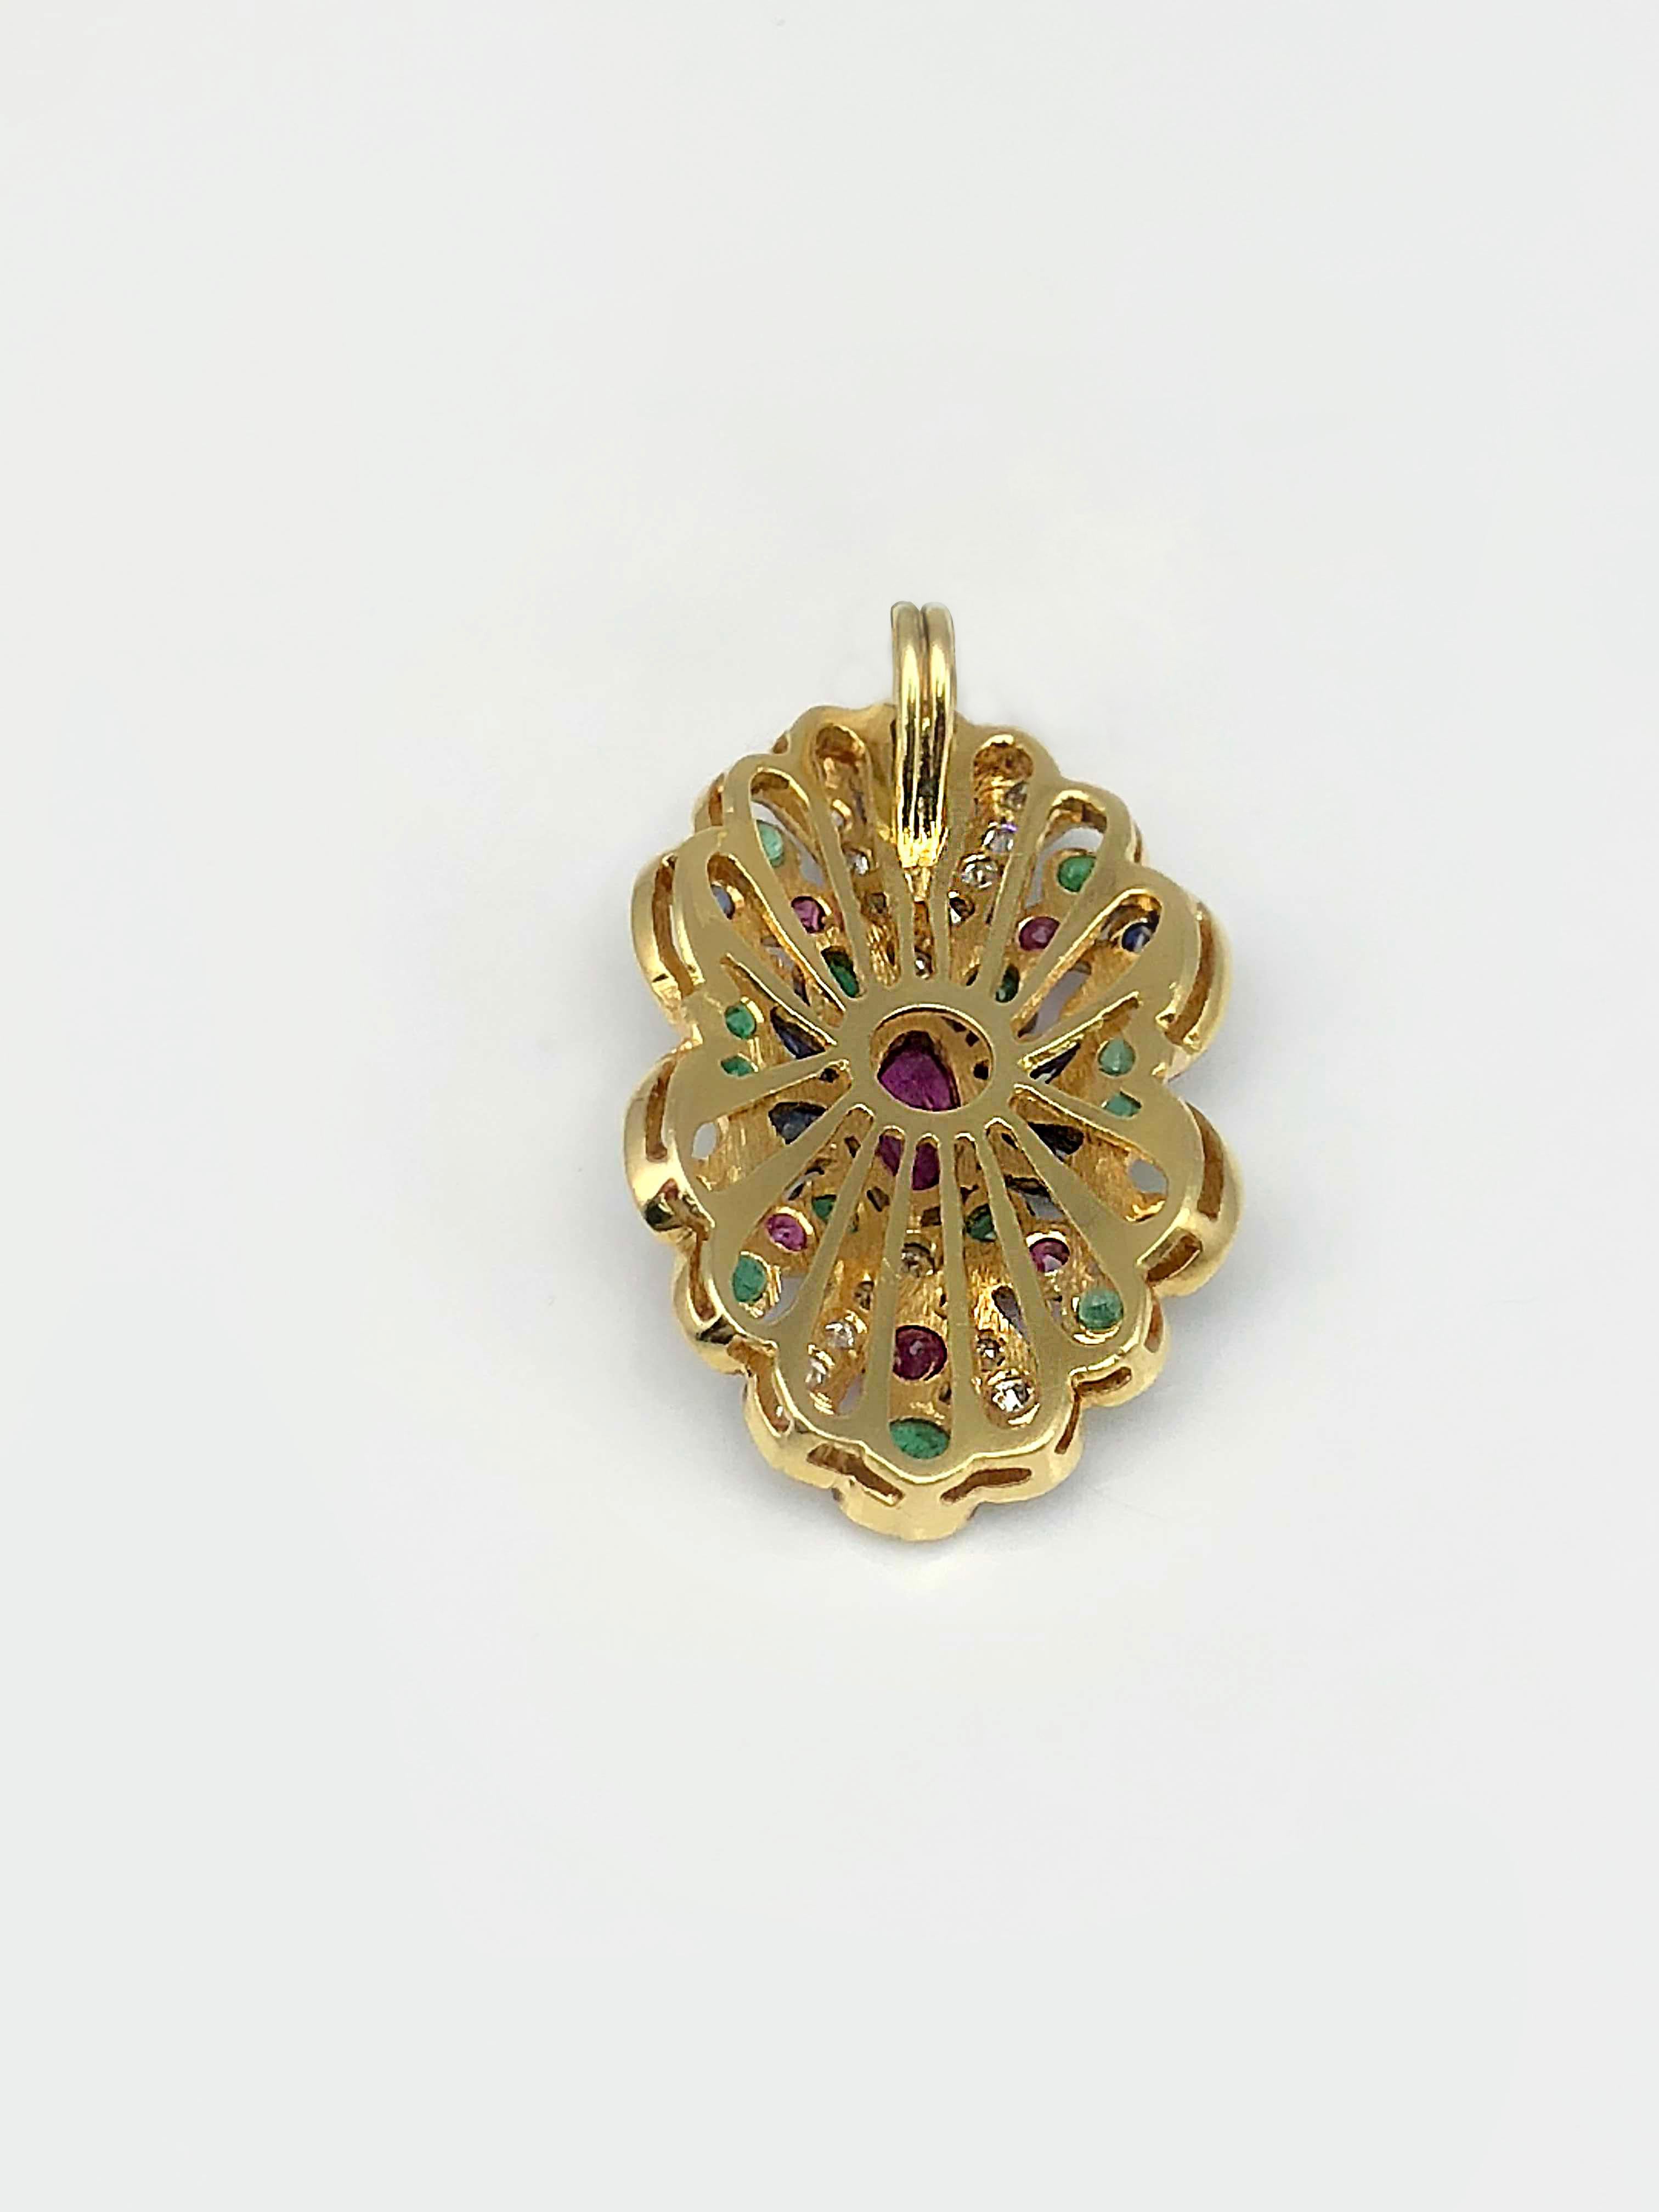 Byzantine Georgios Collection 18 Karat Gold Diamond Pendant with Sapphires Rubies Emerald For Sale